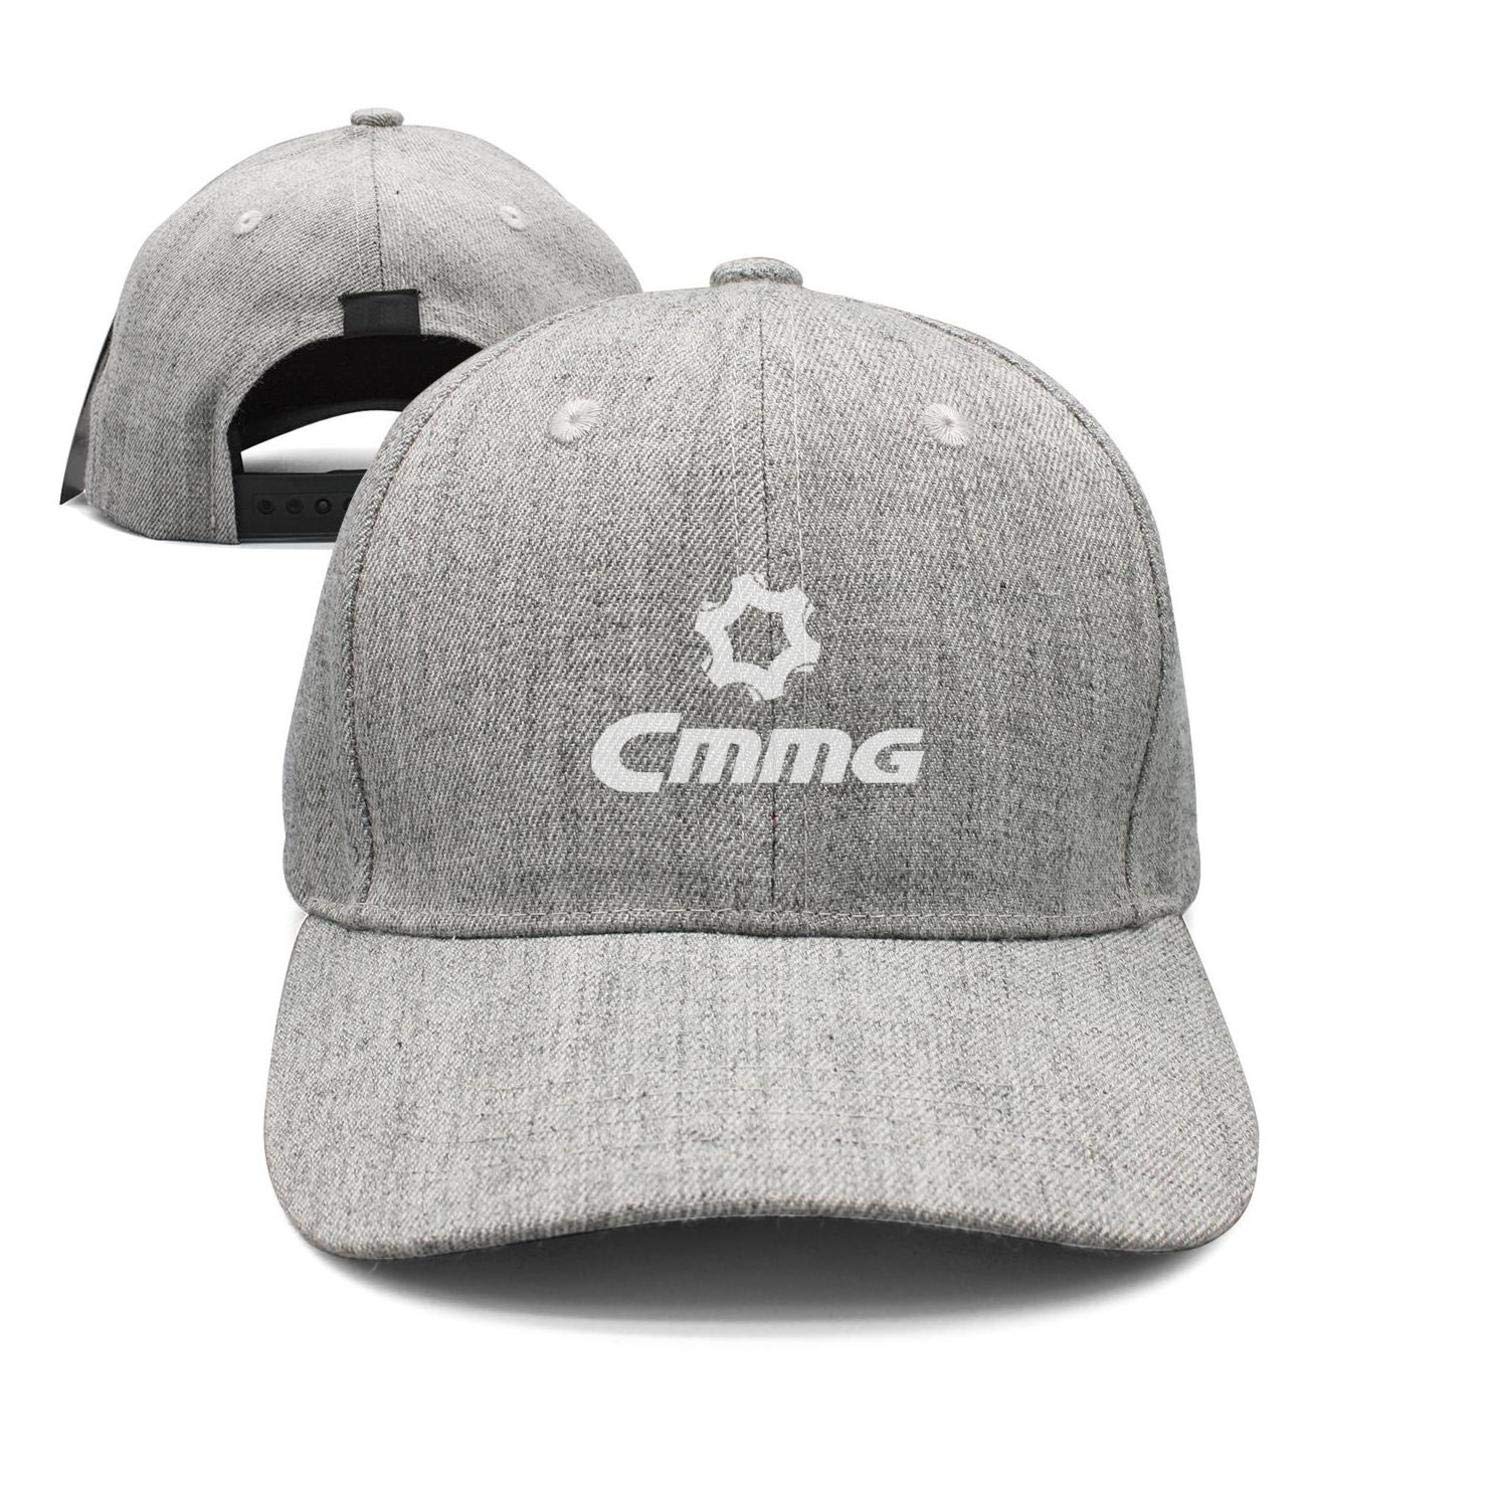 CMMG Logo - Amazon.com: NAIT CMMG-Logo- Cap Adjustable Cotton Back Closure: Clothing